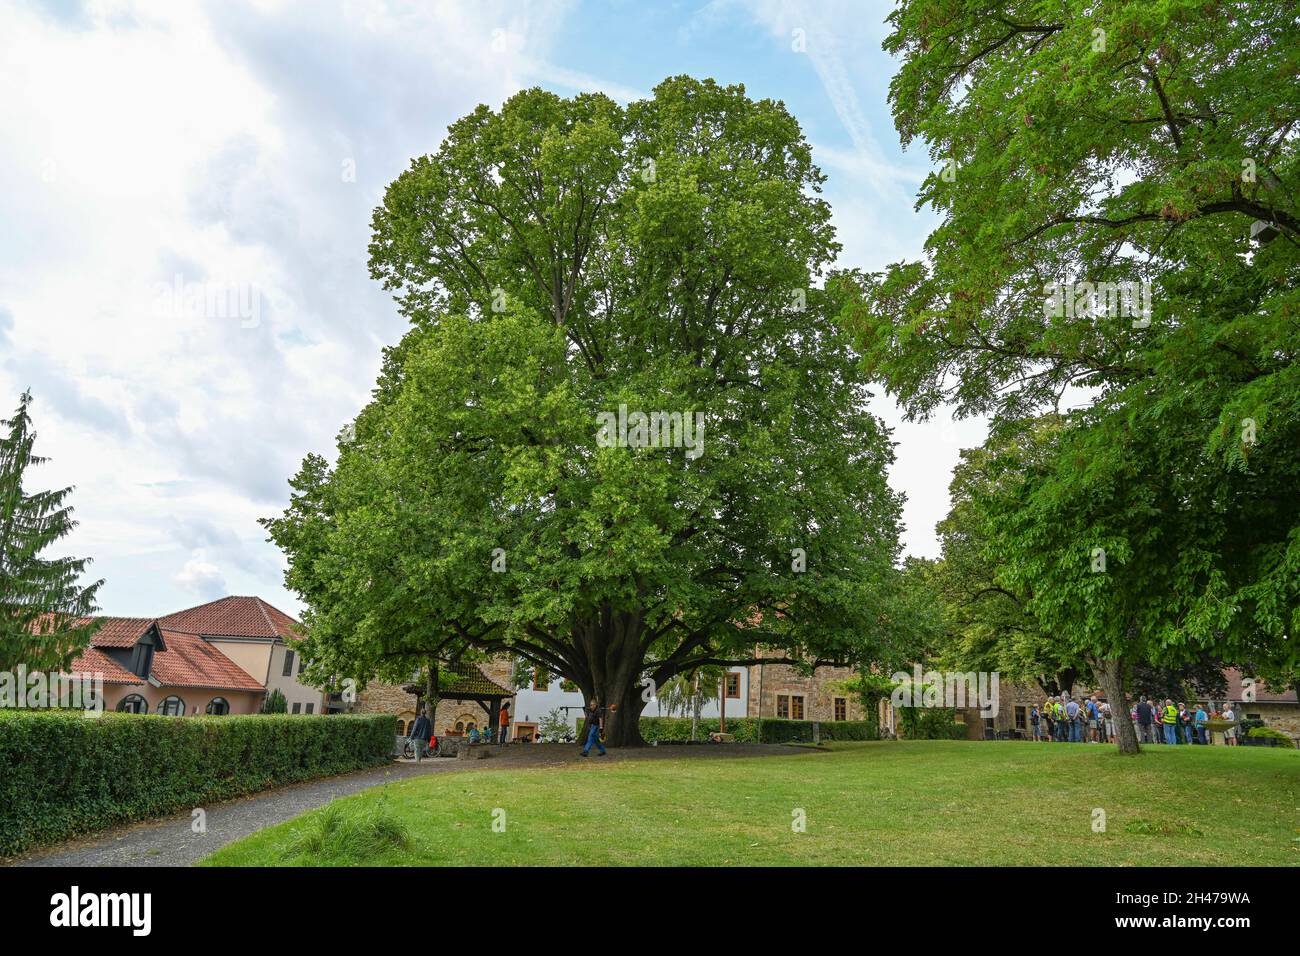 Naturdenkmal, Lindenbaum, Burghof, Burg Creuzburg, Hessen, Deutschland Stock Photo